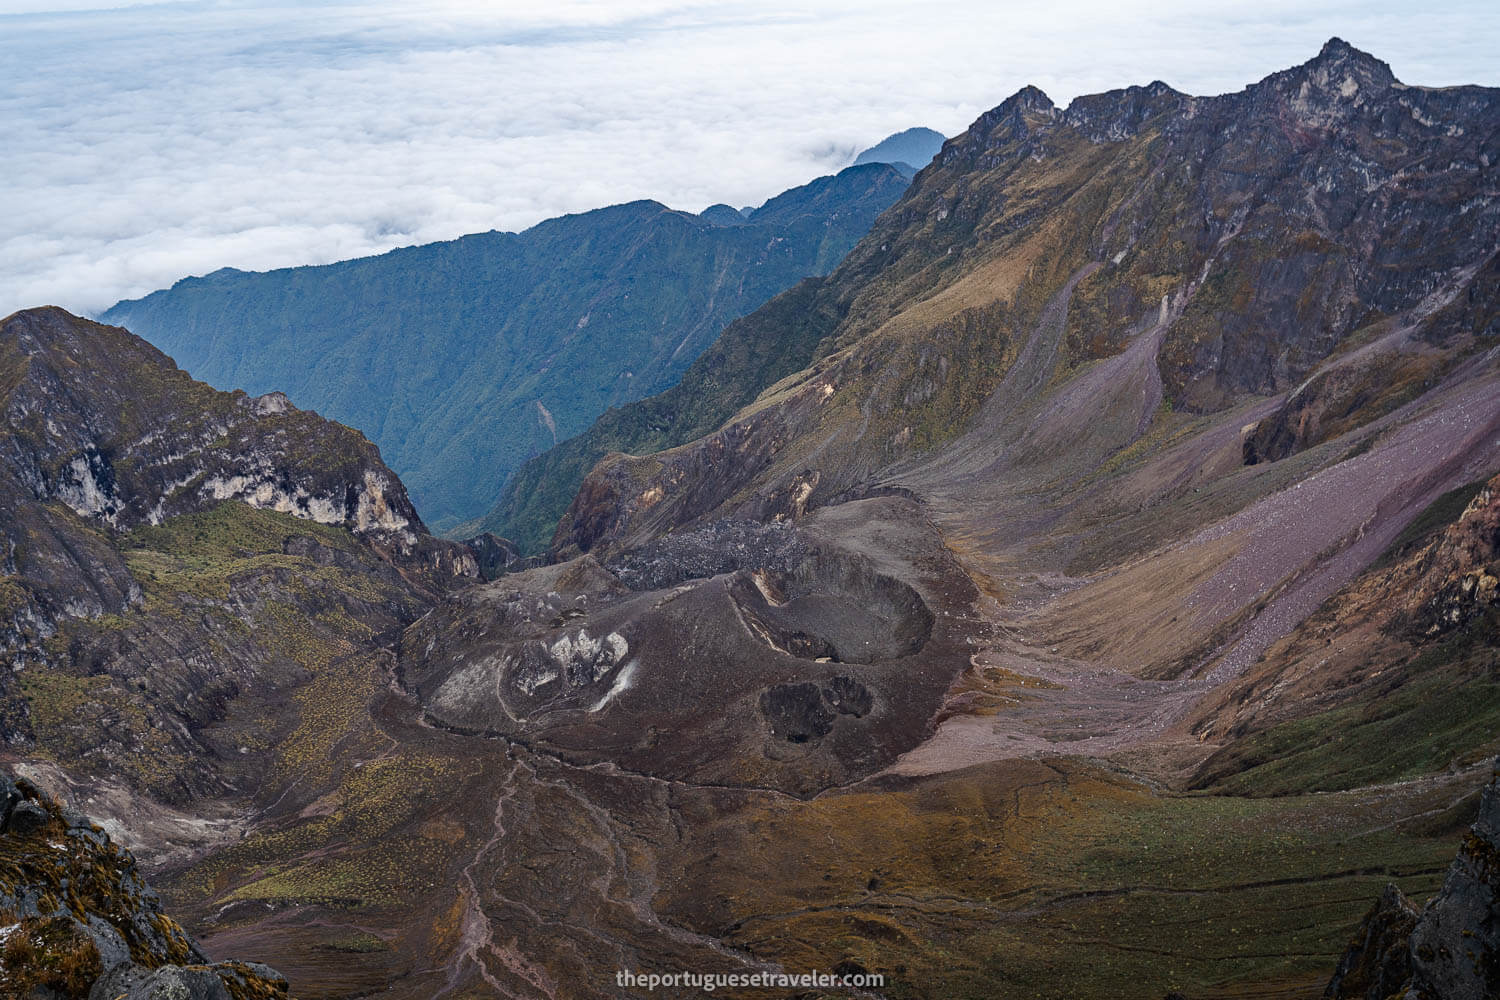 The caldera and crater of Guagua Pichincha Volcano